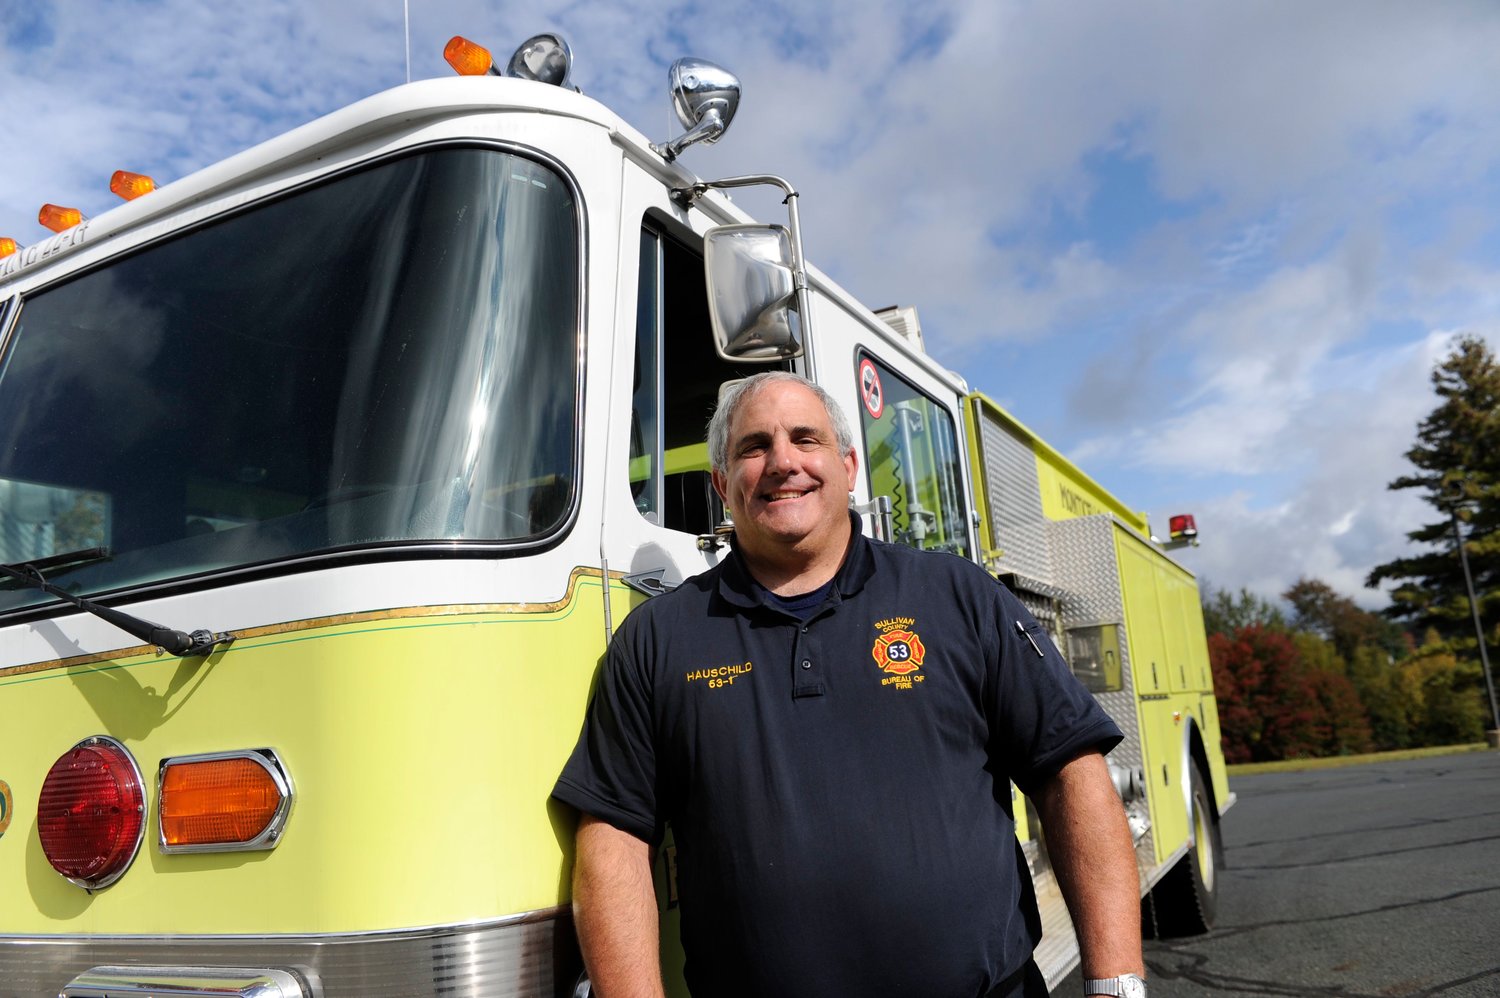 Sullivan County Fire Coordinator John Hauschild has been in local firematics since he joined the Jeffersonville Volunteer Fire Department in 1981.